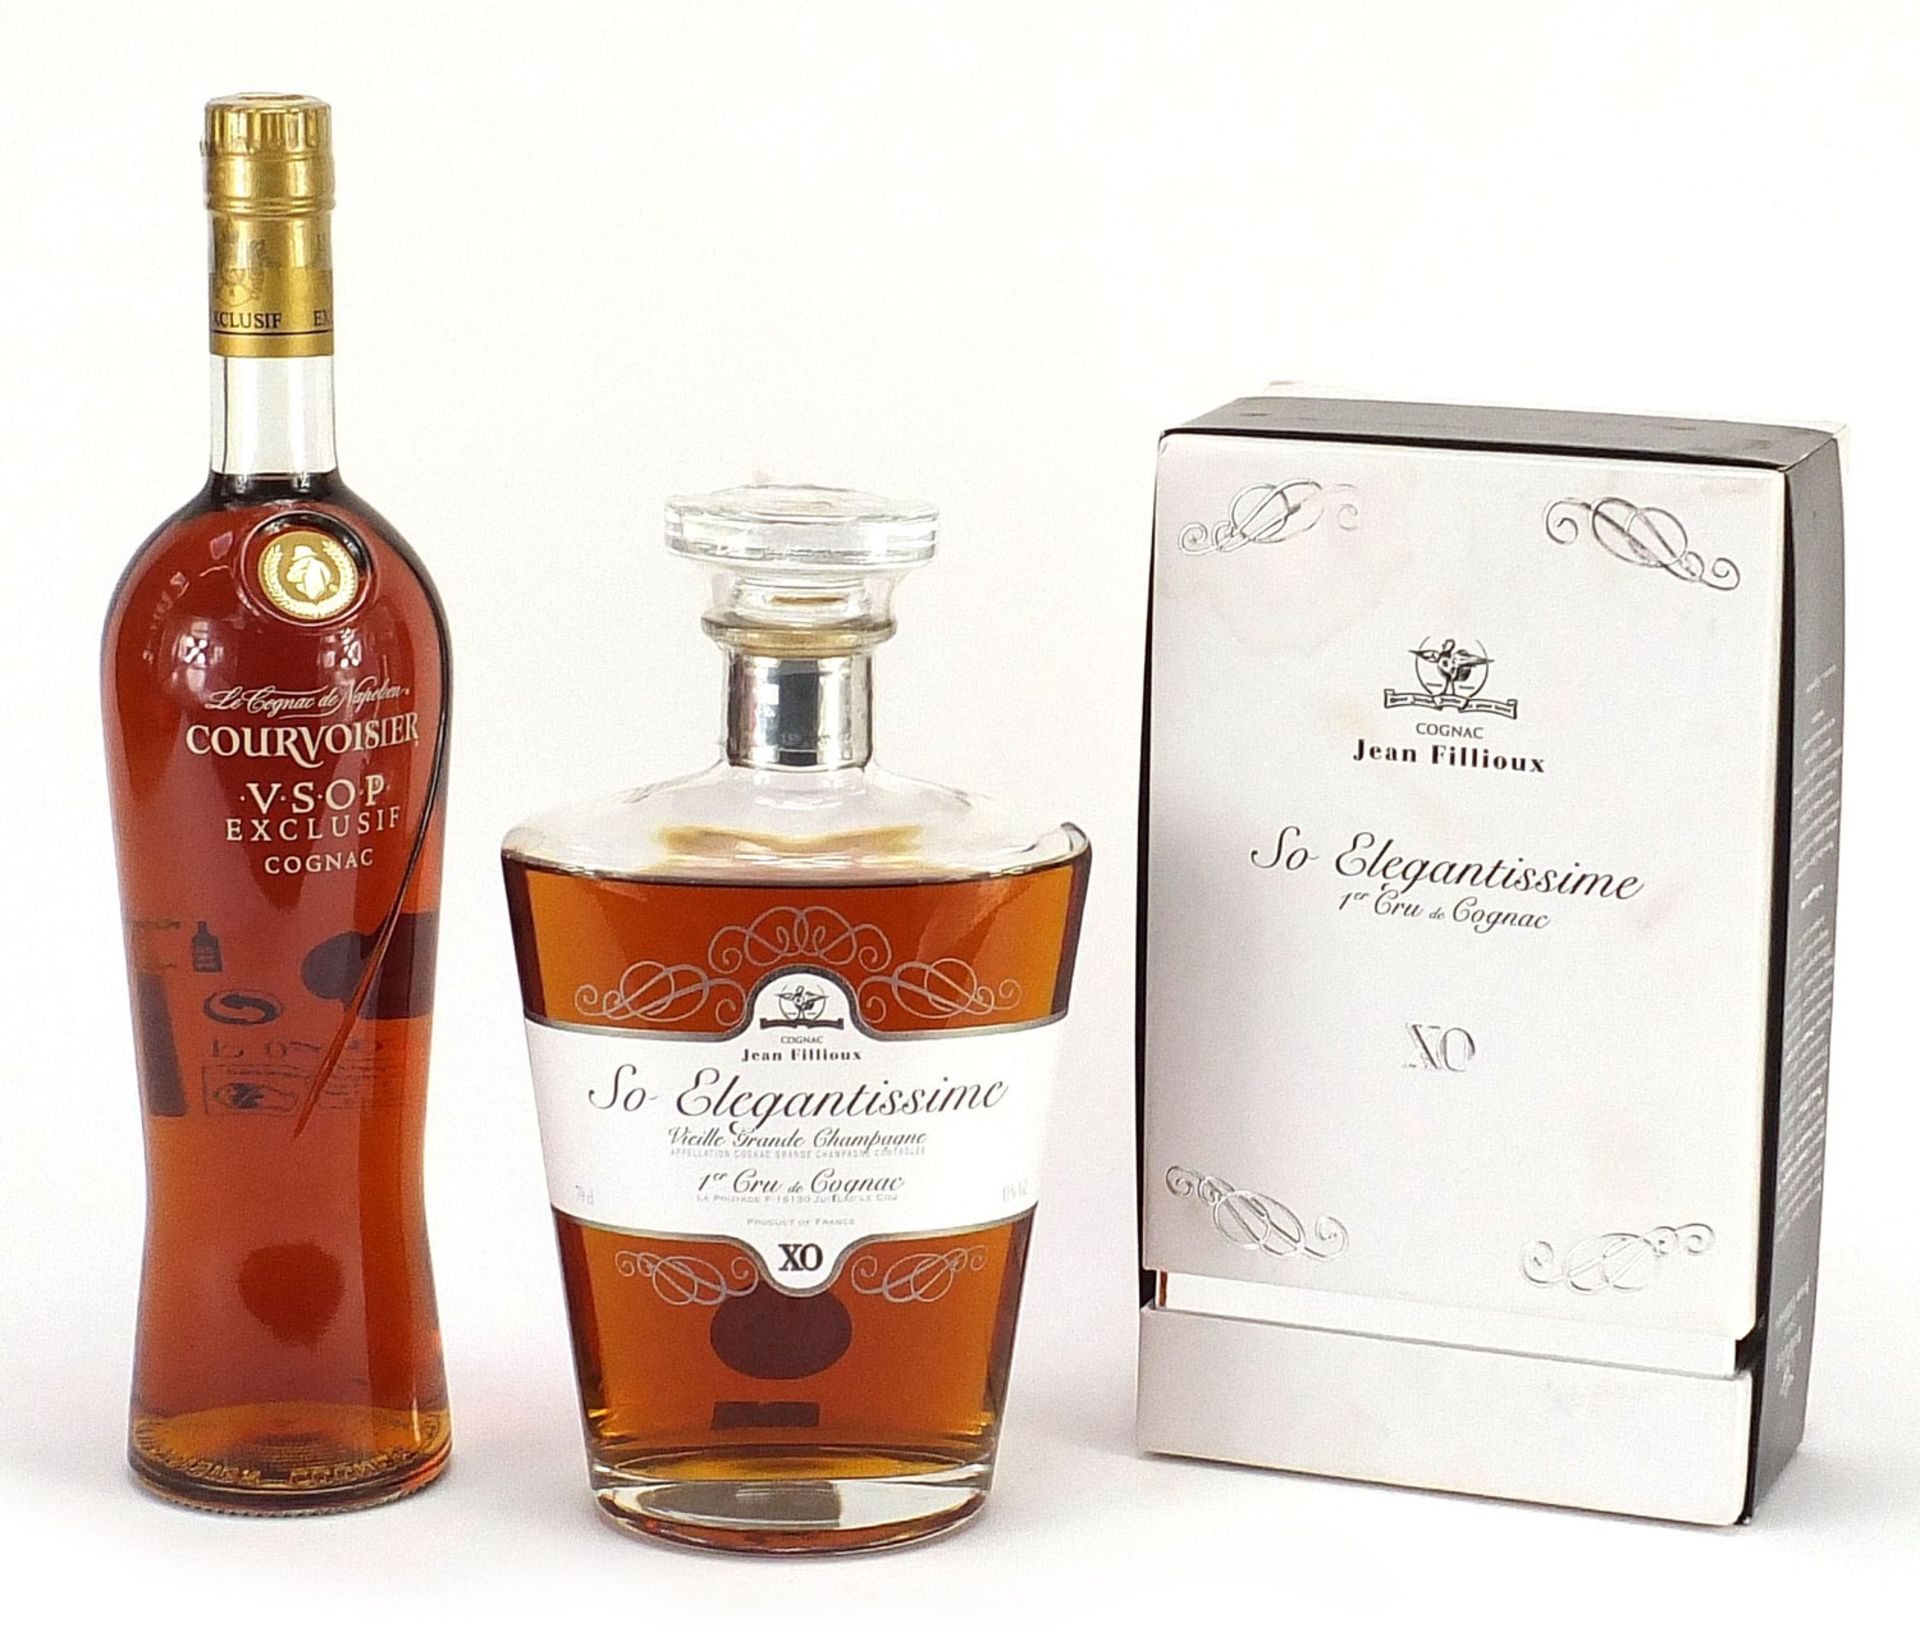 Two bottles of cognac comprising Courvoisier VSOP Exclusive and Jean Fillioux So Elegantissima 1er